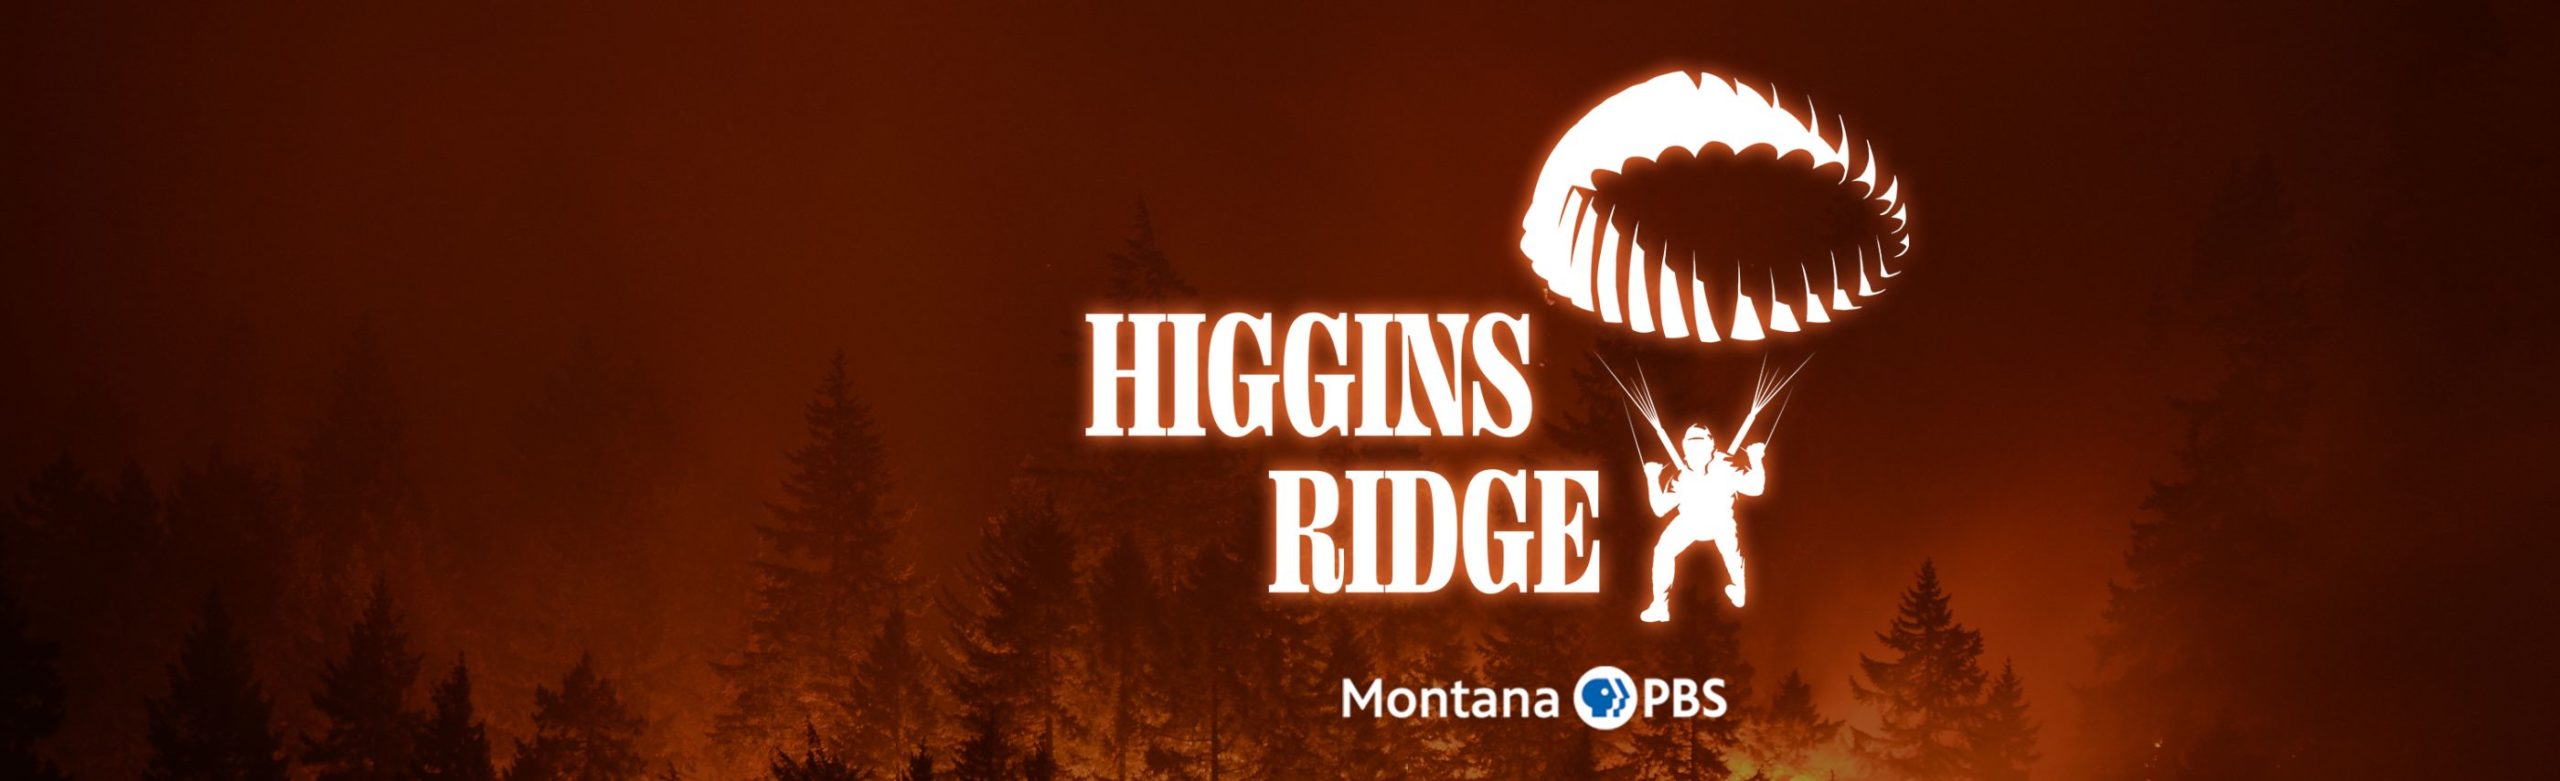 ‘Higgins Ridge’ Film Premiere